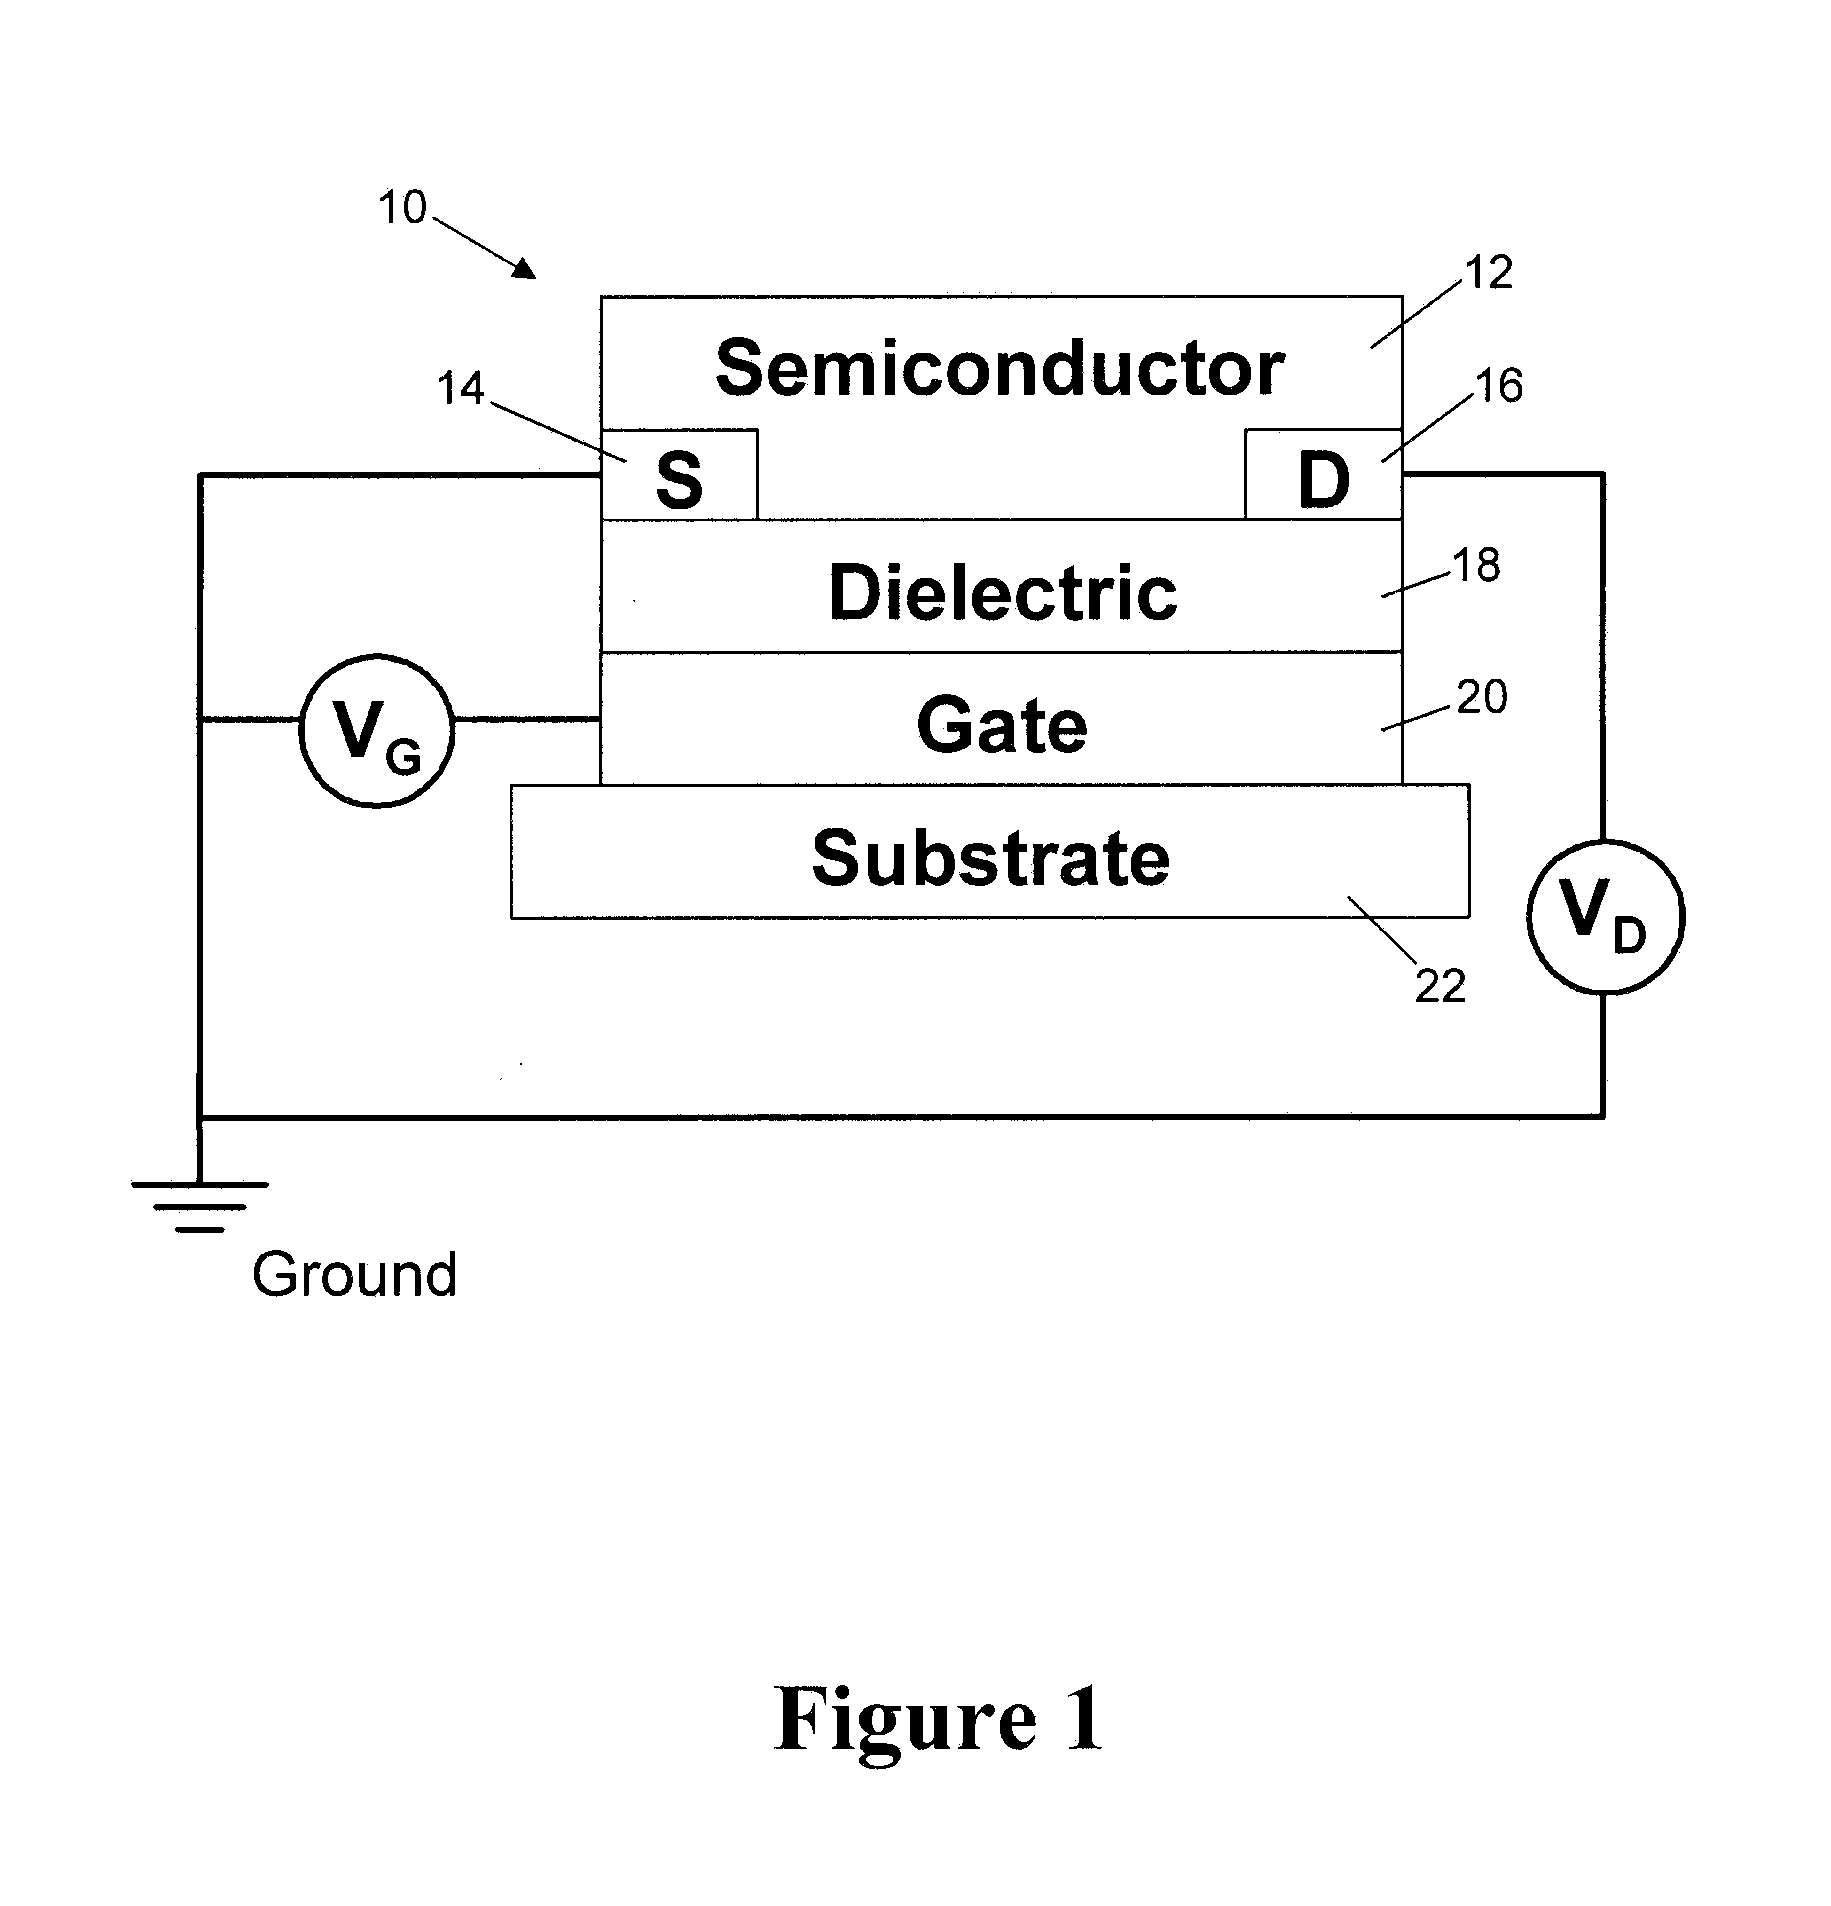 Fabrication method for thin-film field-effect transistors